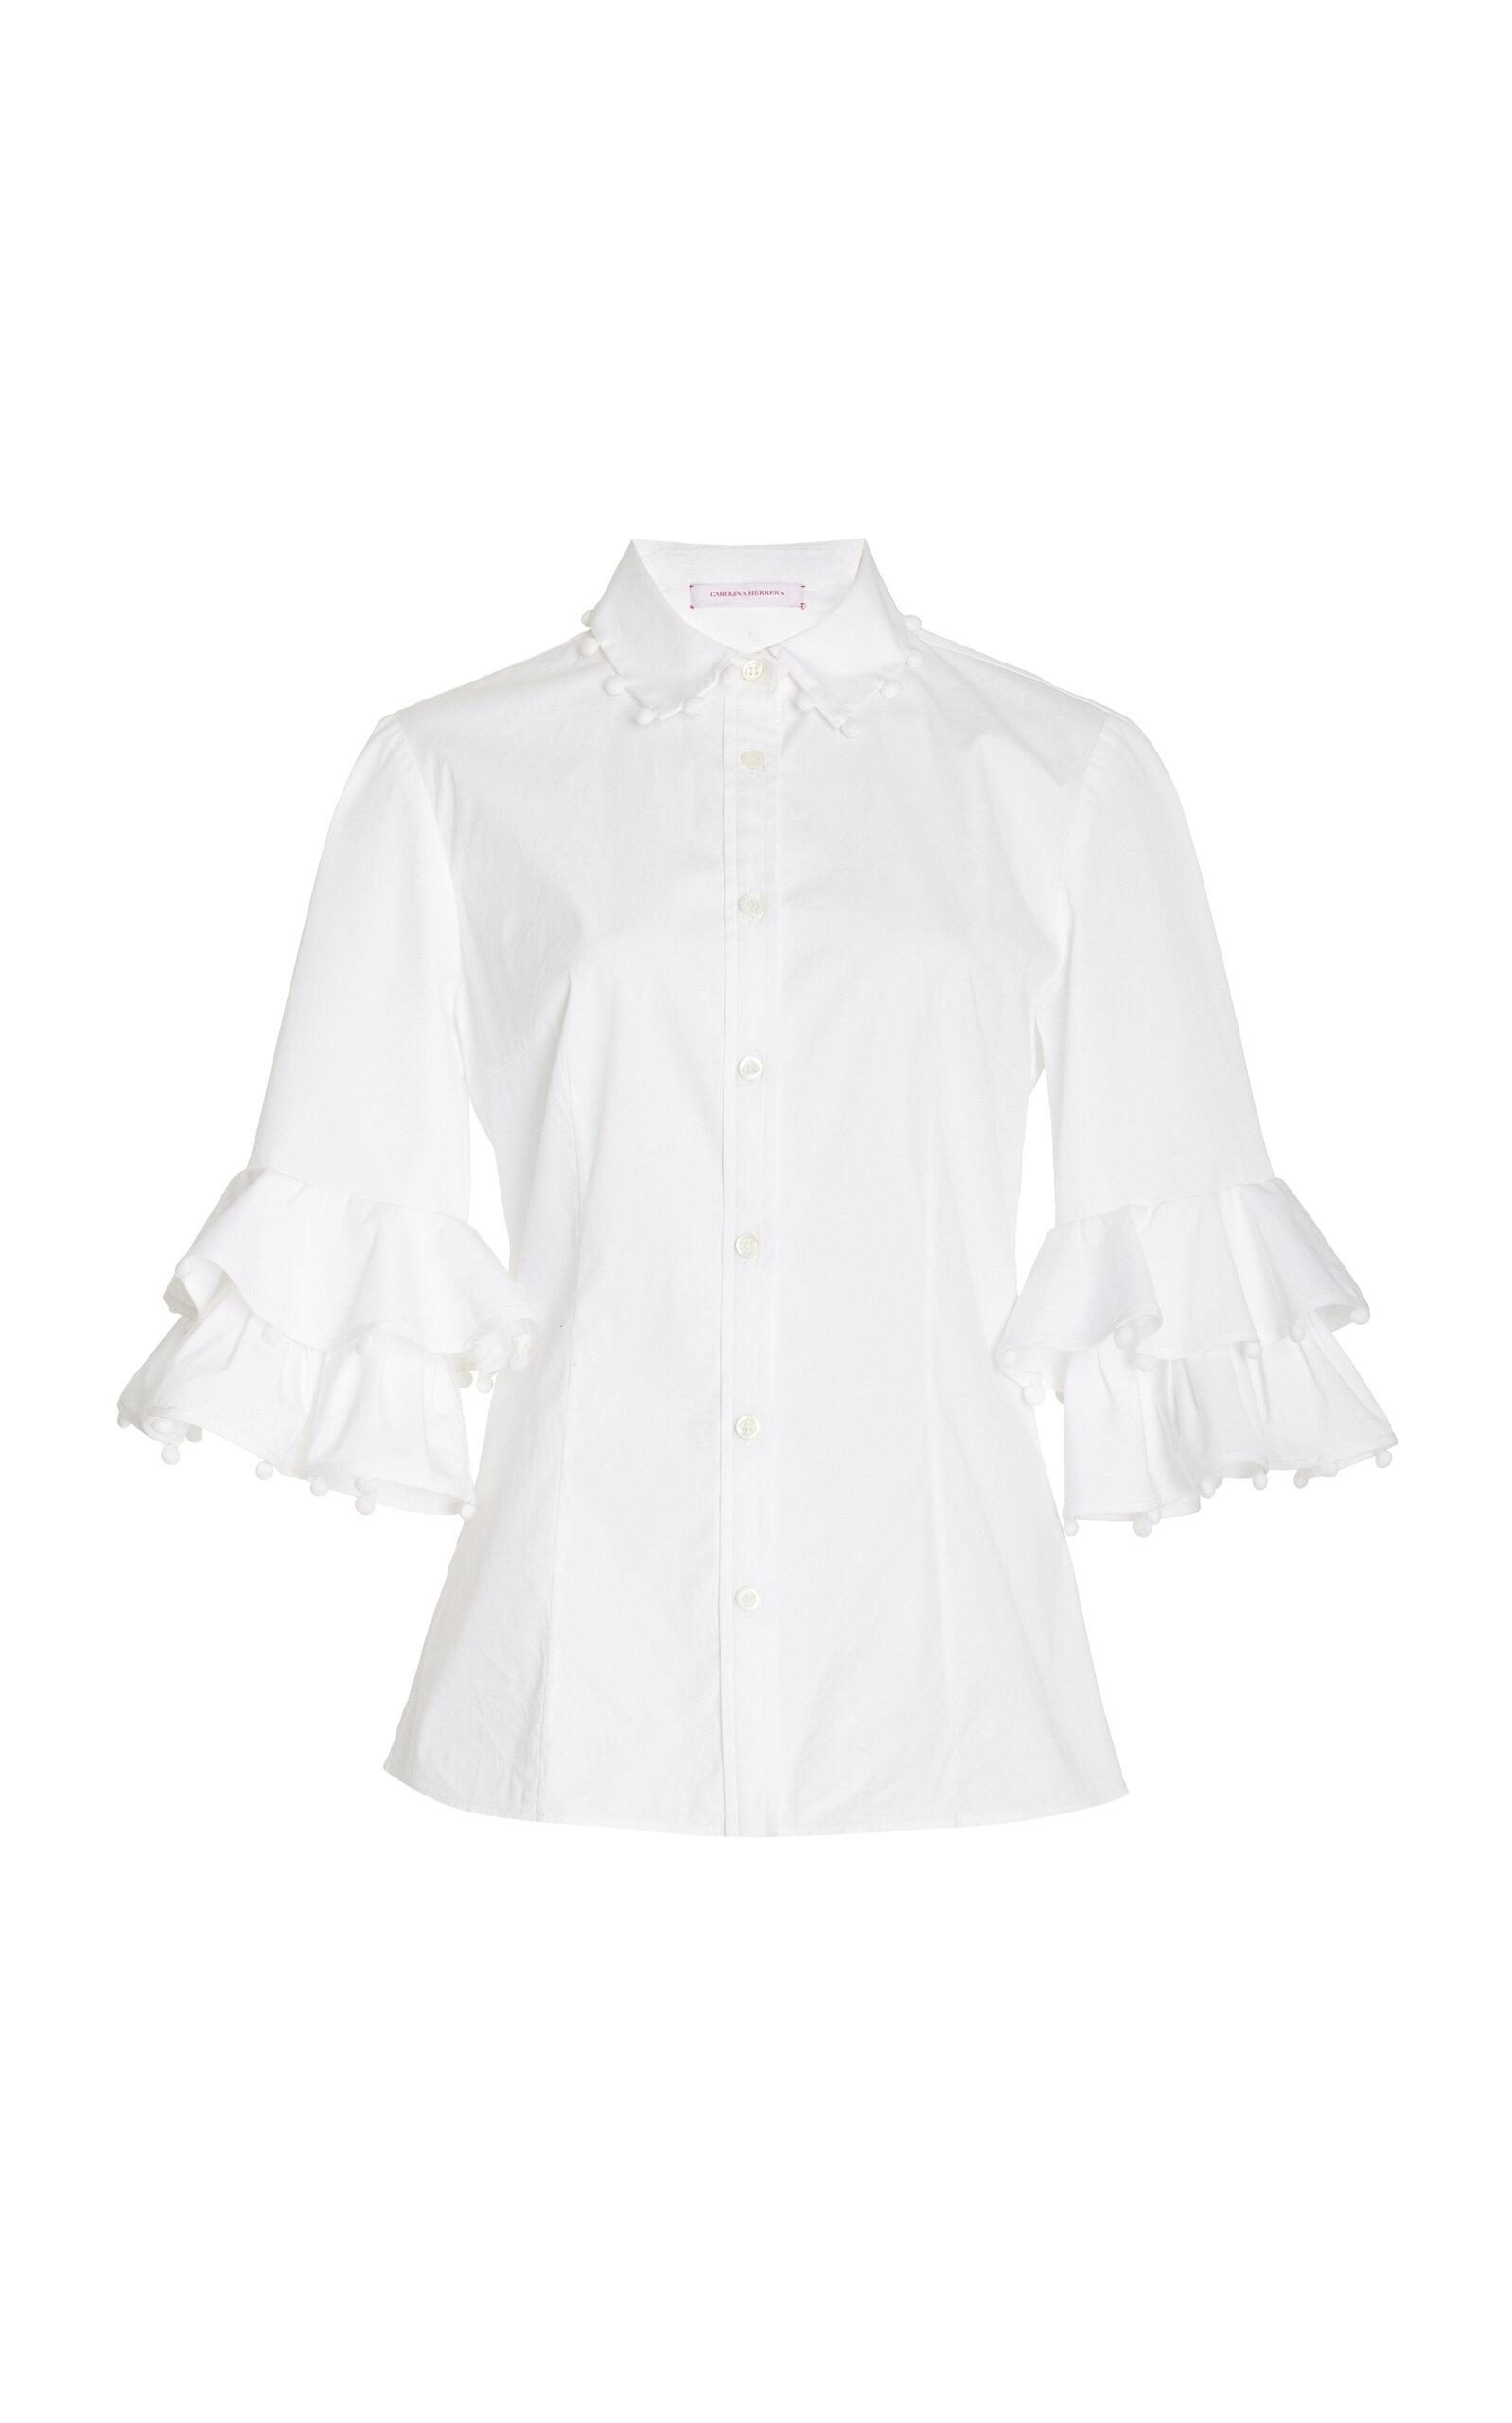 Carolina Herrera Embroidered Ruffled Stretch-cotton Blouse in White | Lyst